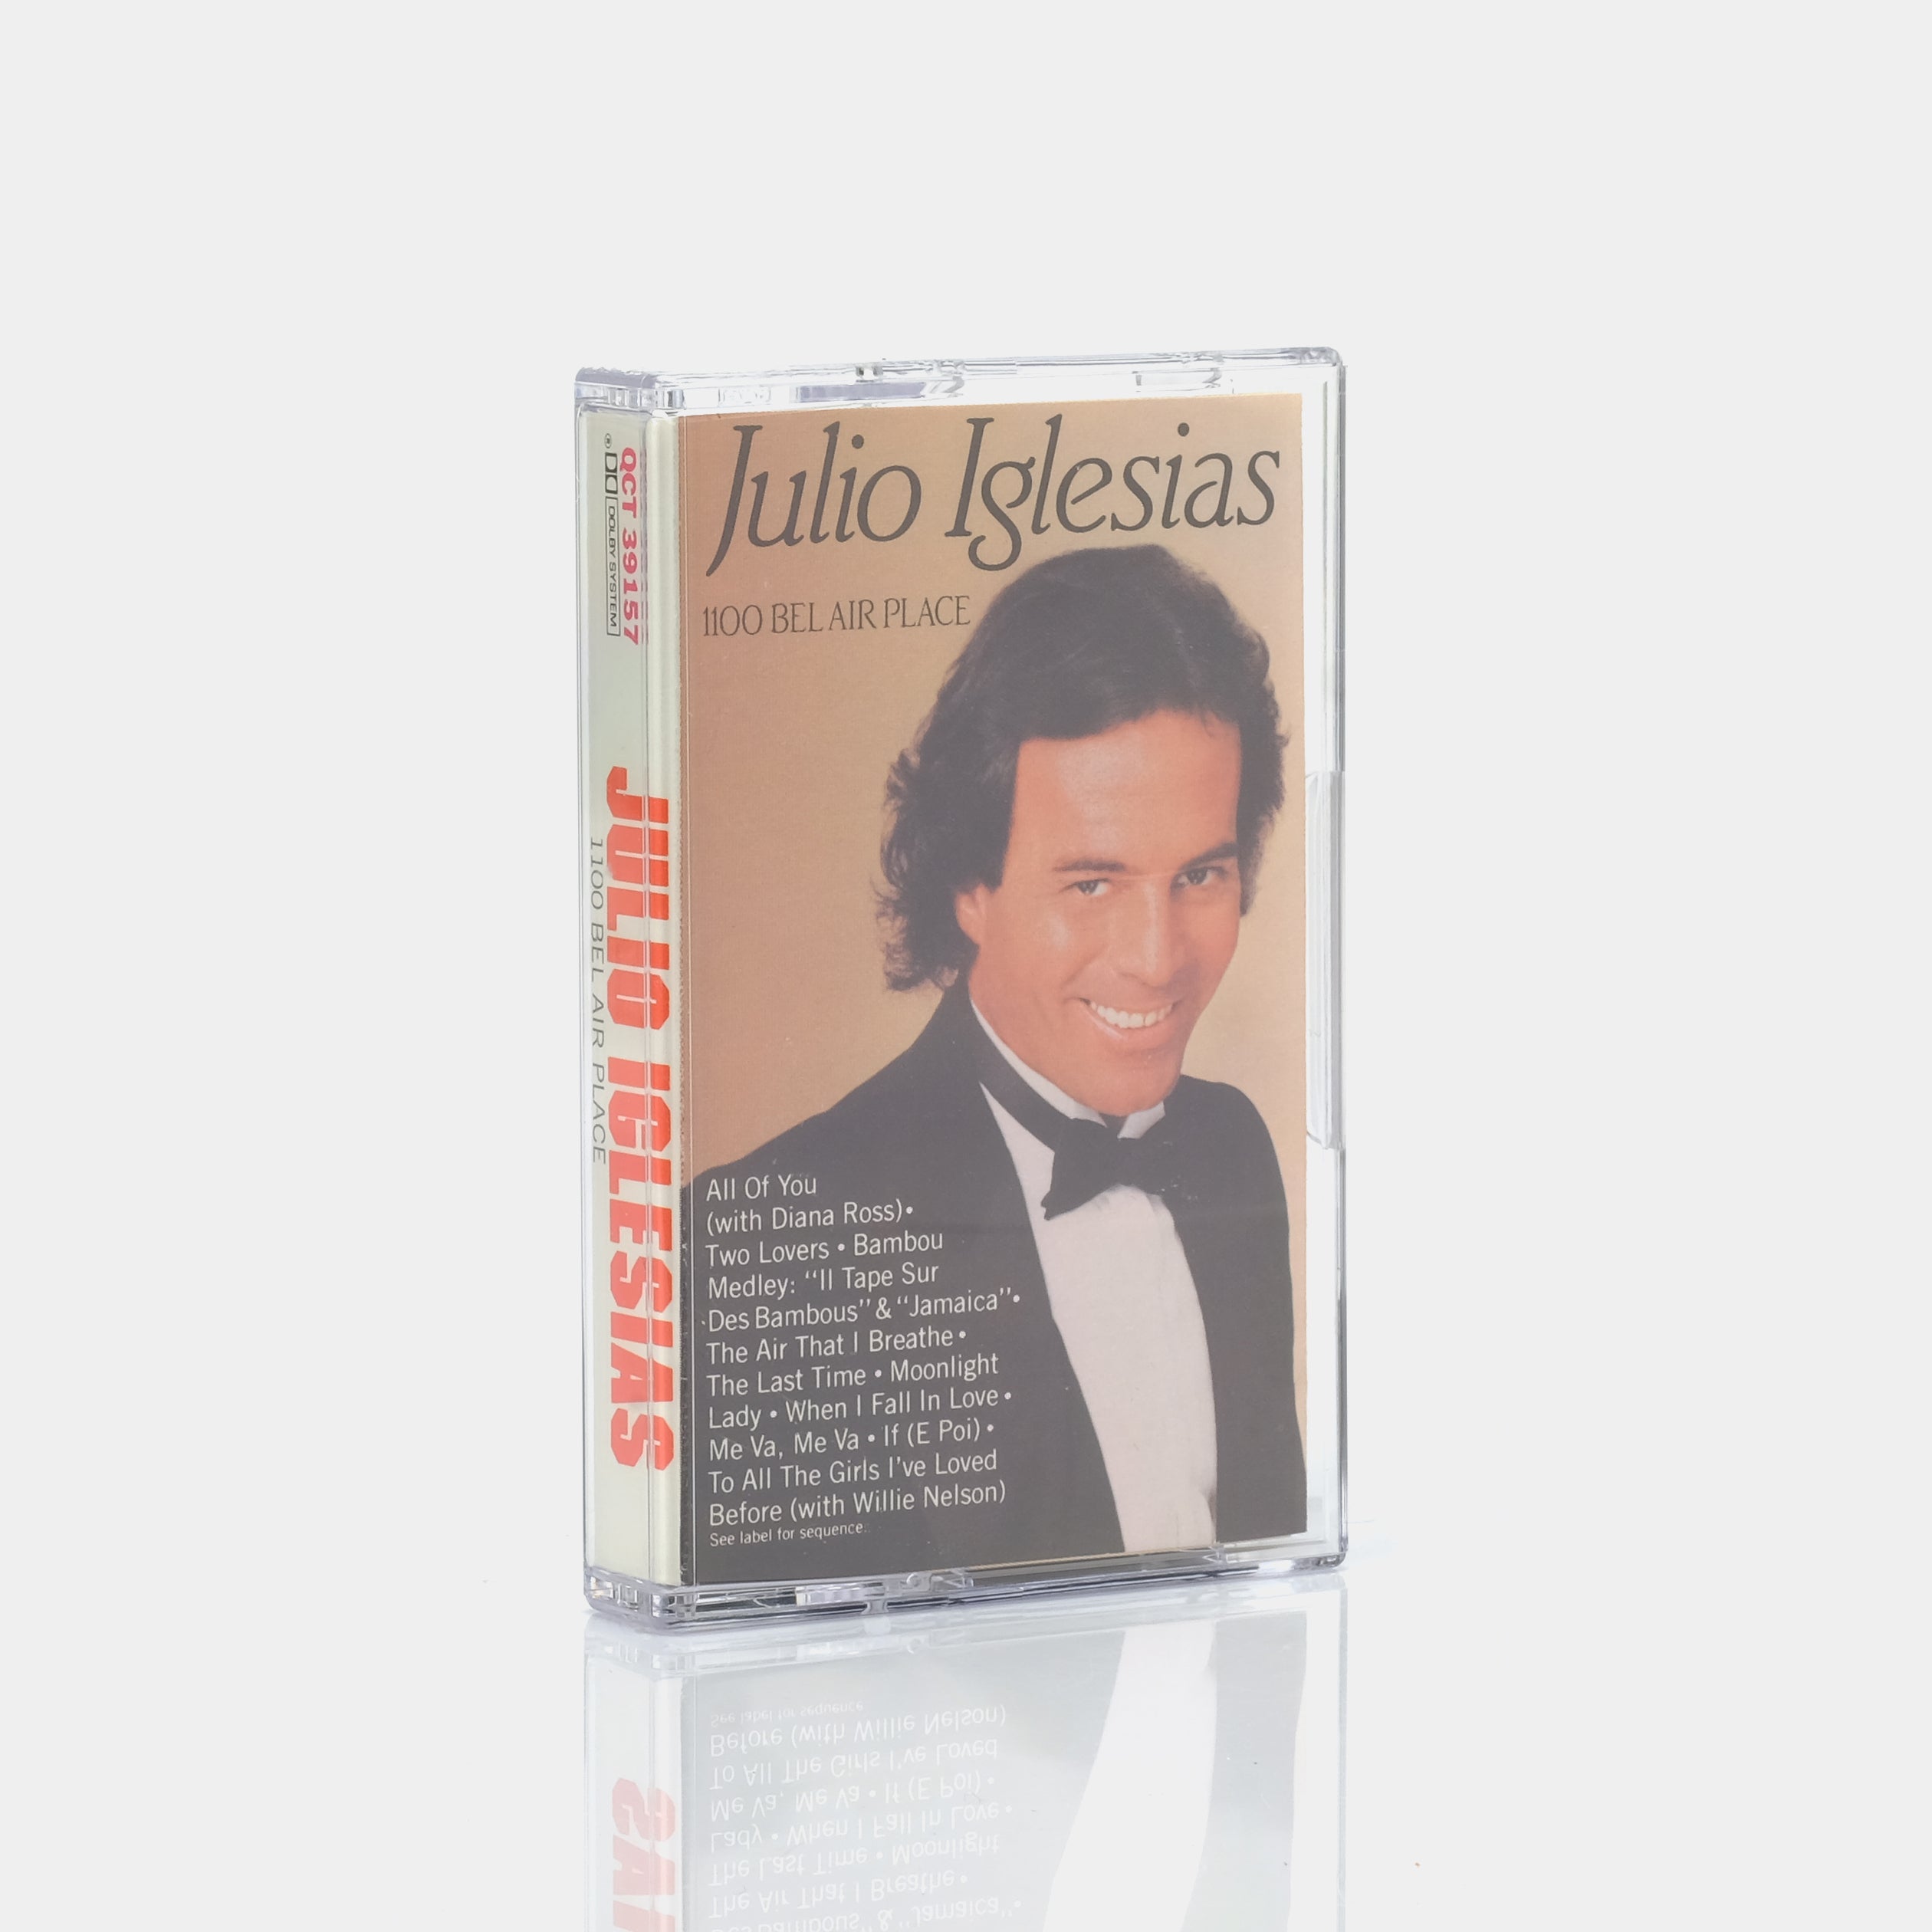 Julio Iglesias - 1100 Bel Air Place Cassette Tape